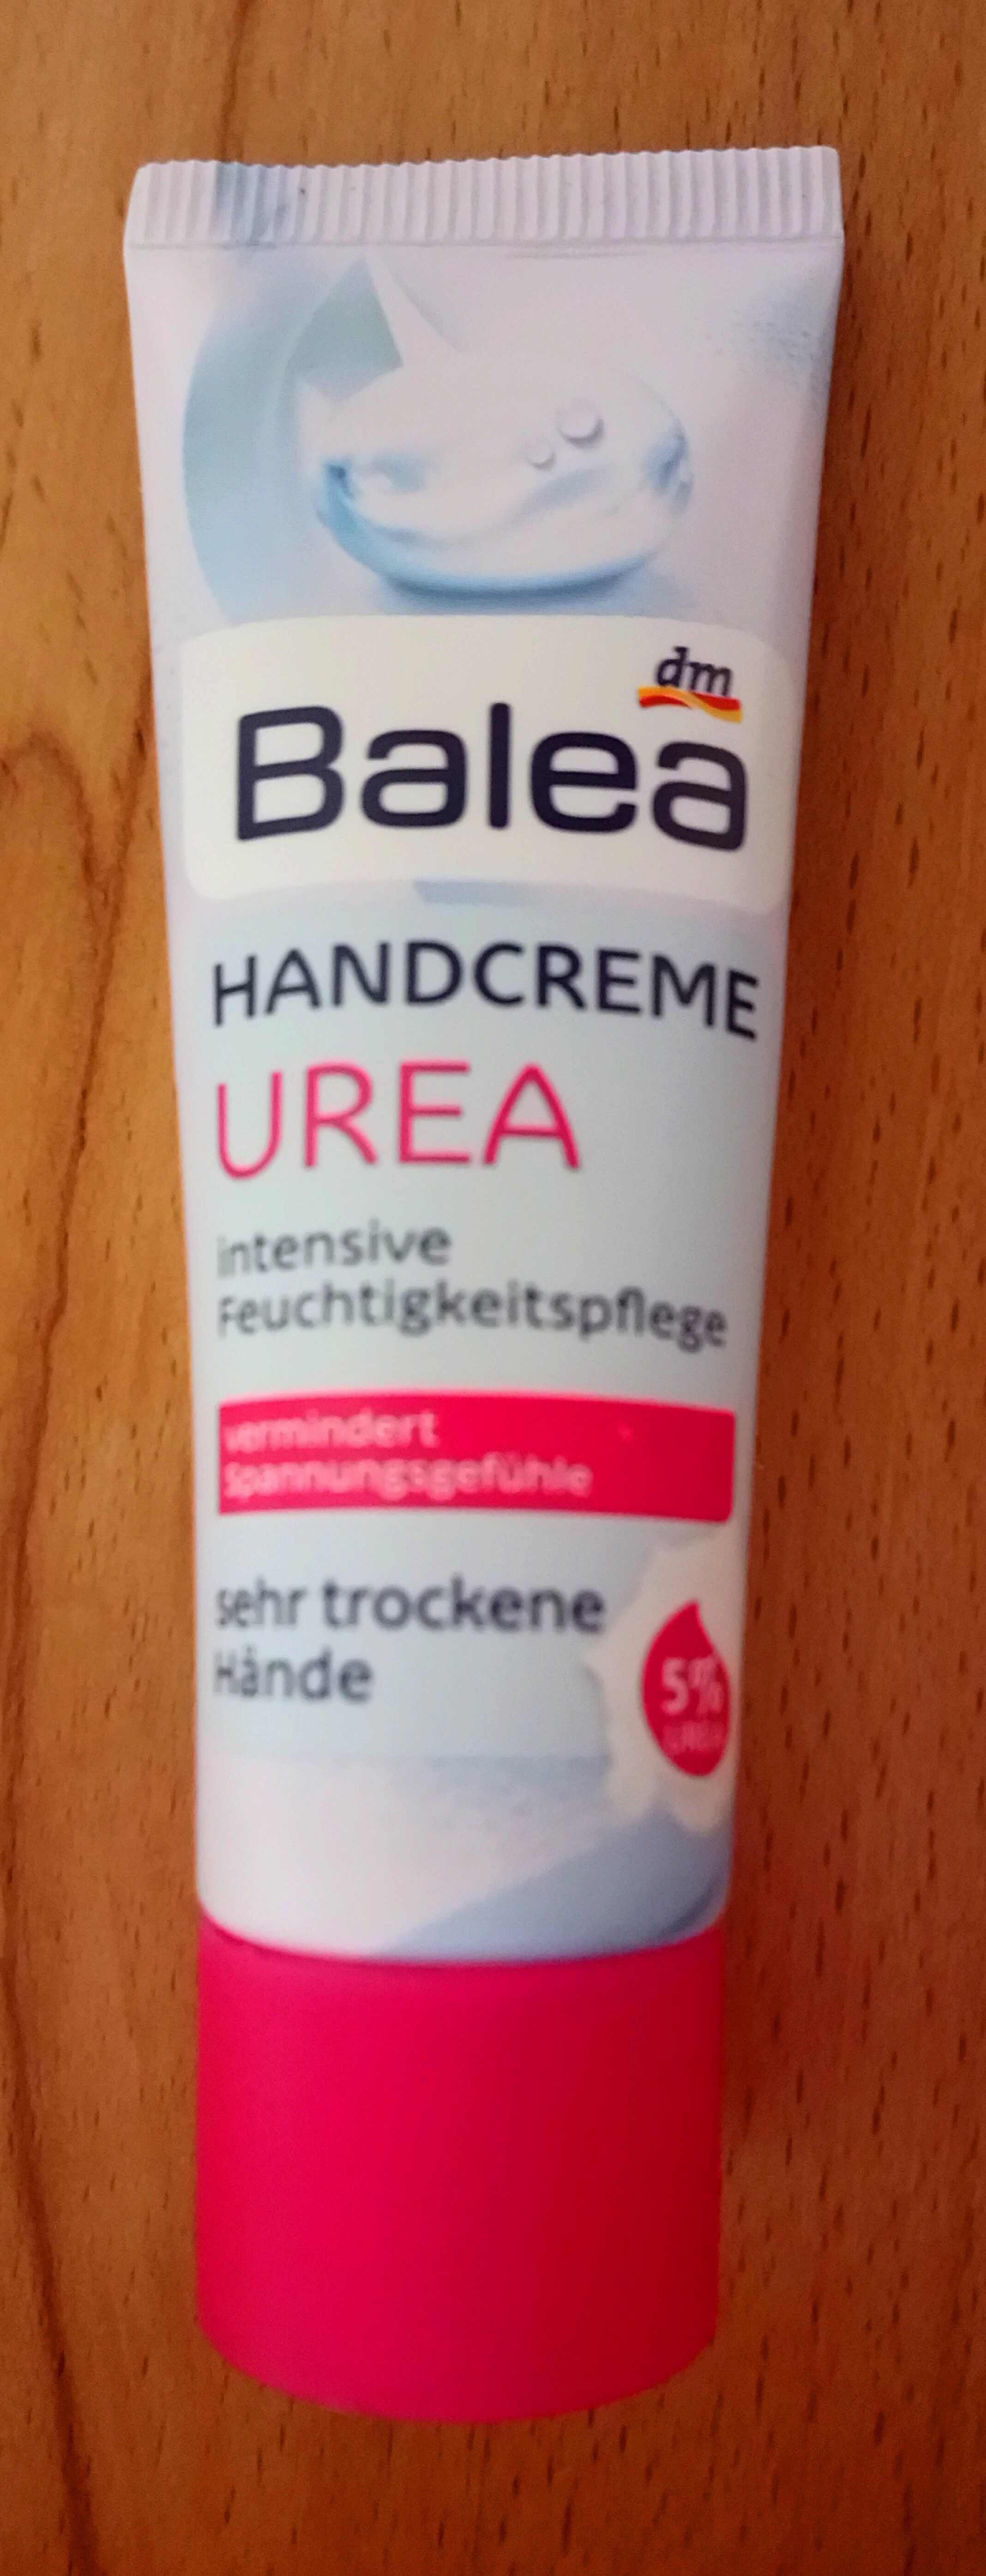 Handcreme Urea - Produkt - de